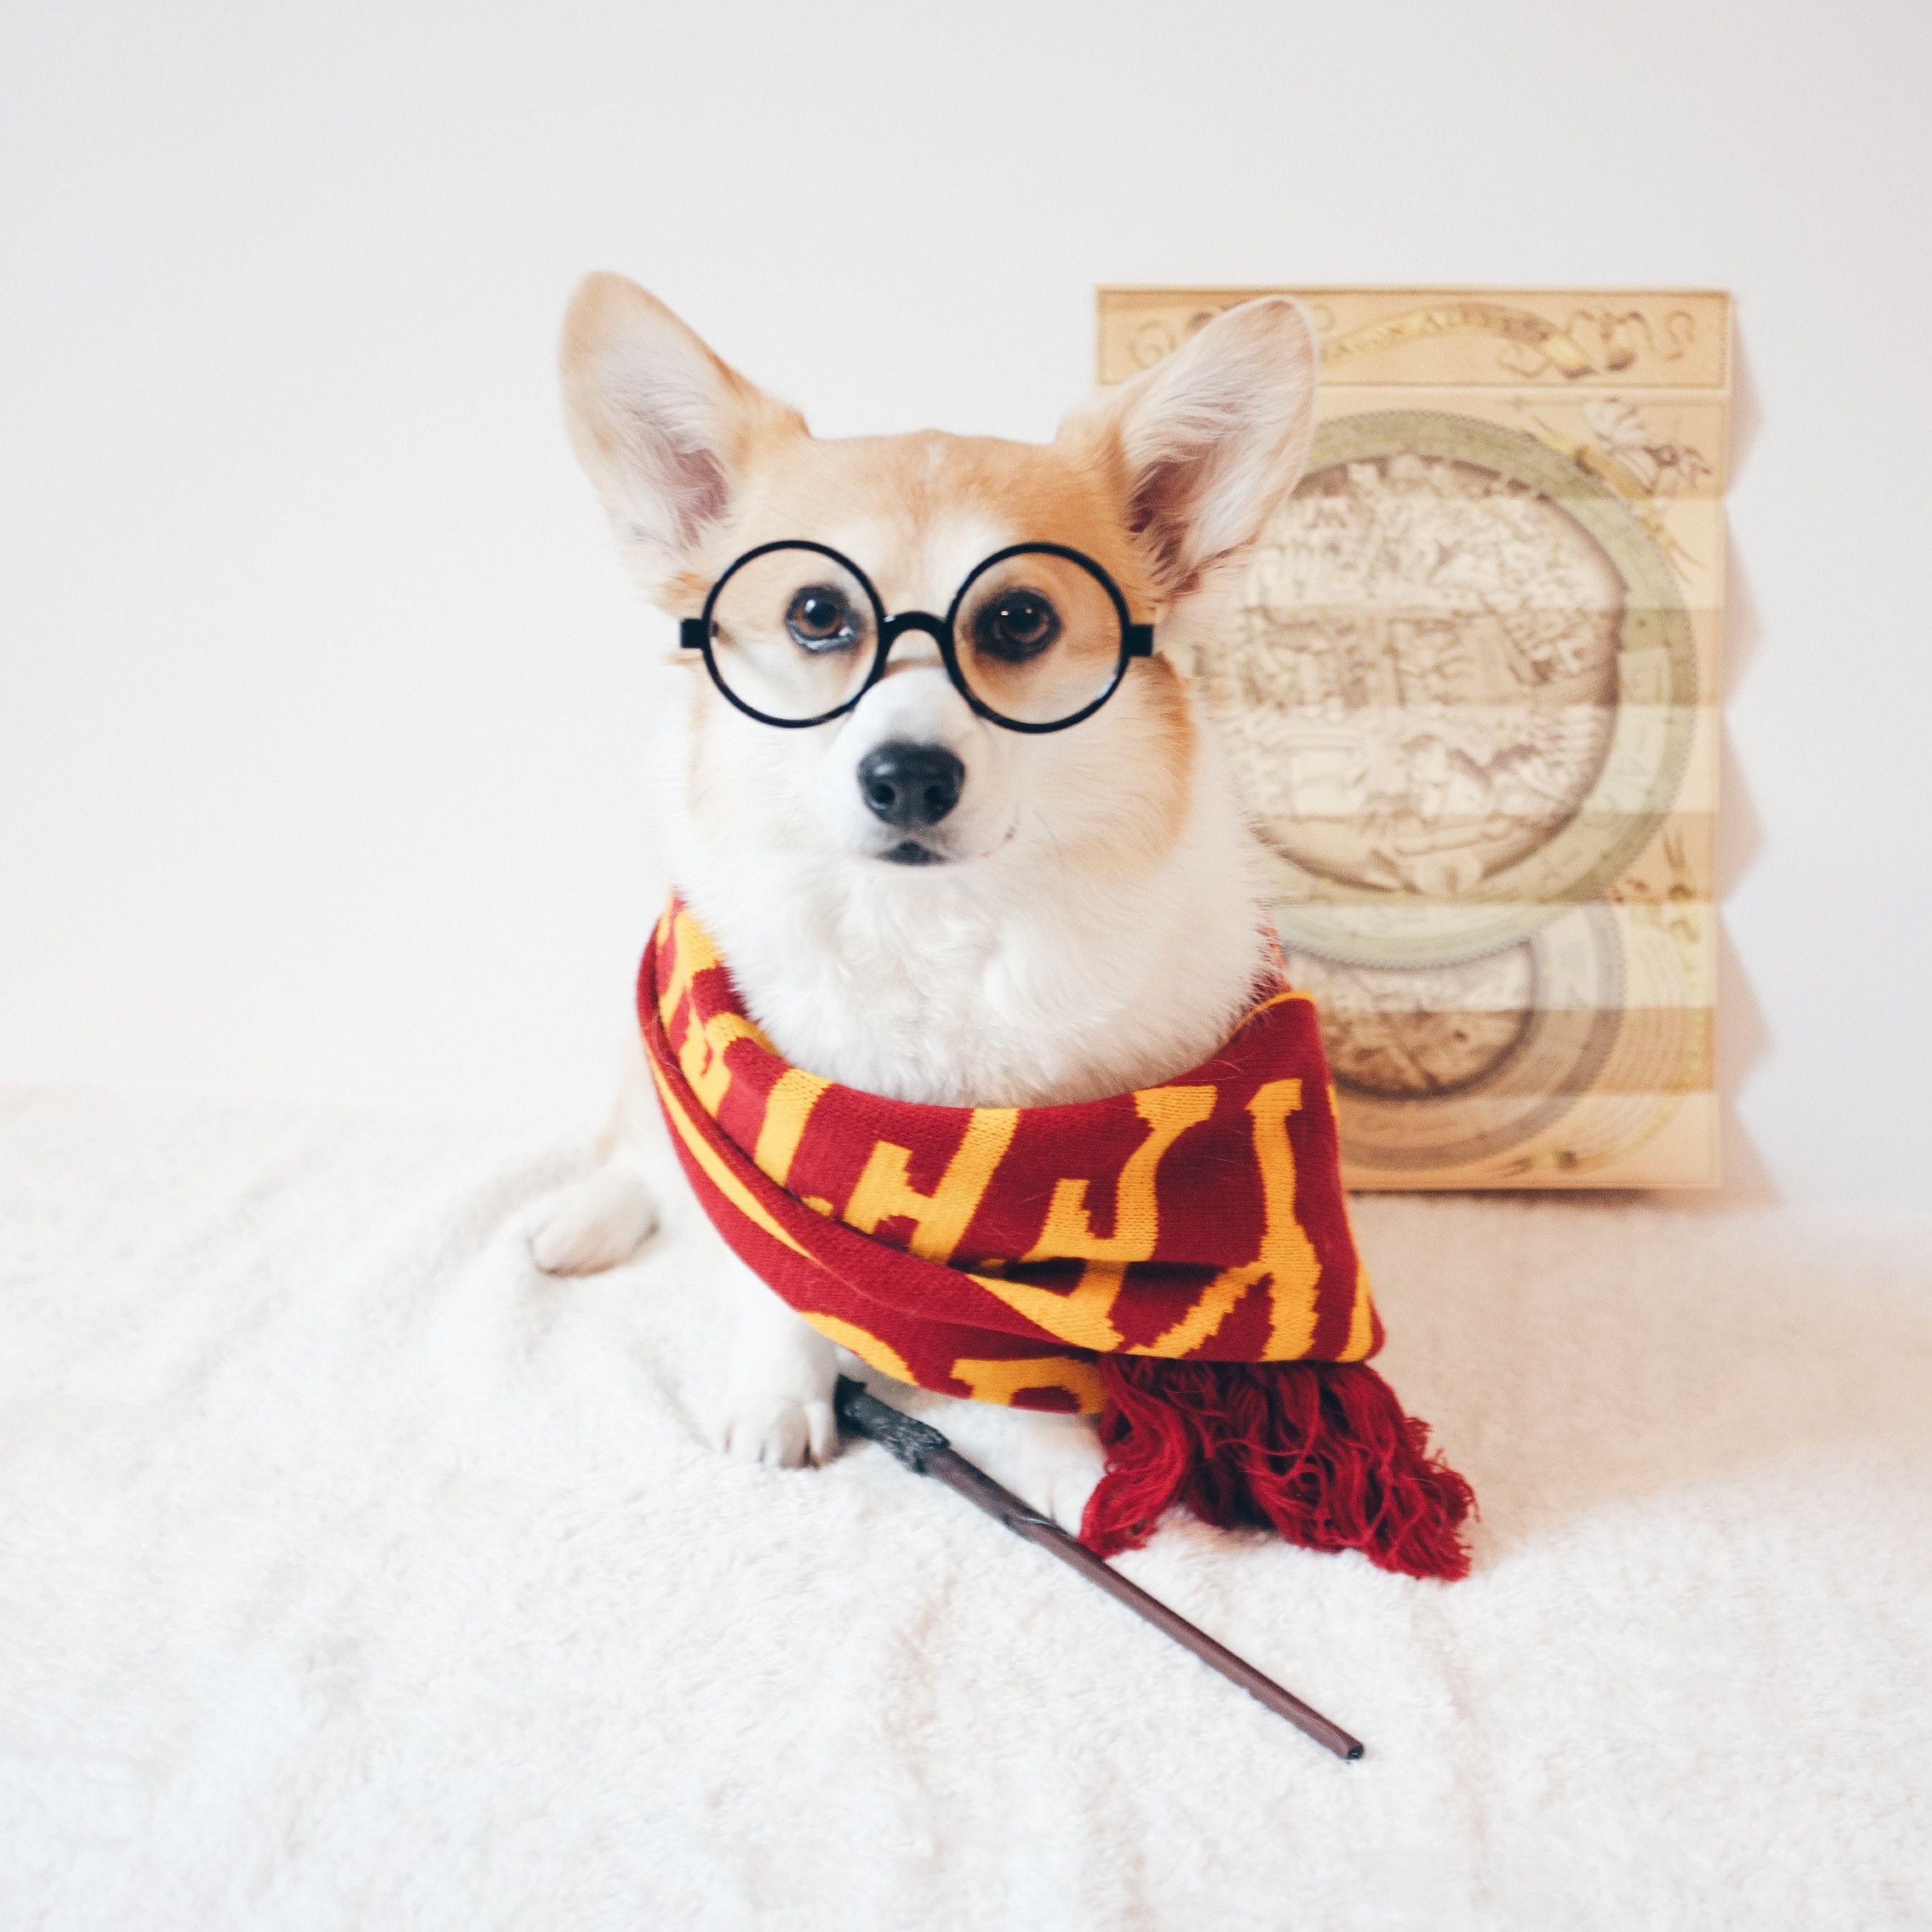 Gryffincorg. Harry potter dog, Pet costumes, Corgi